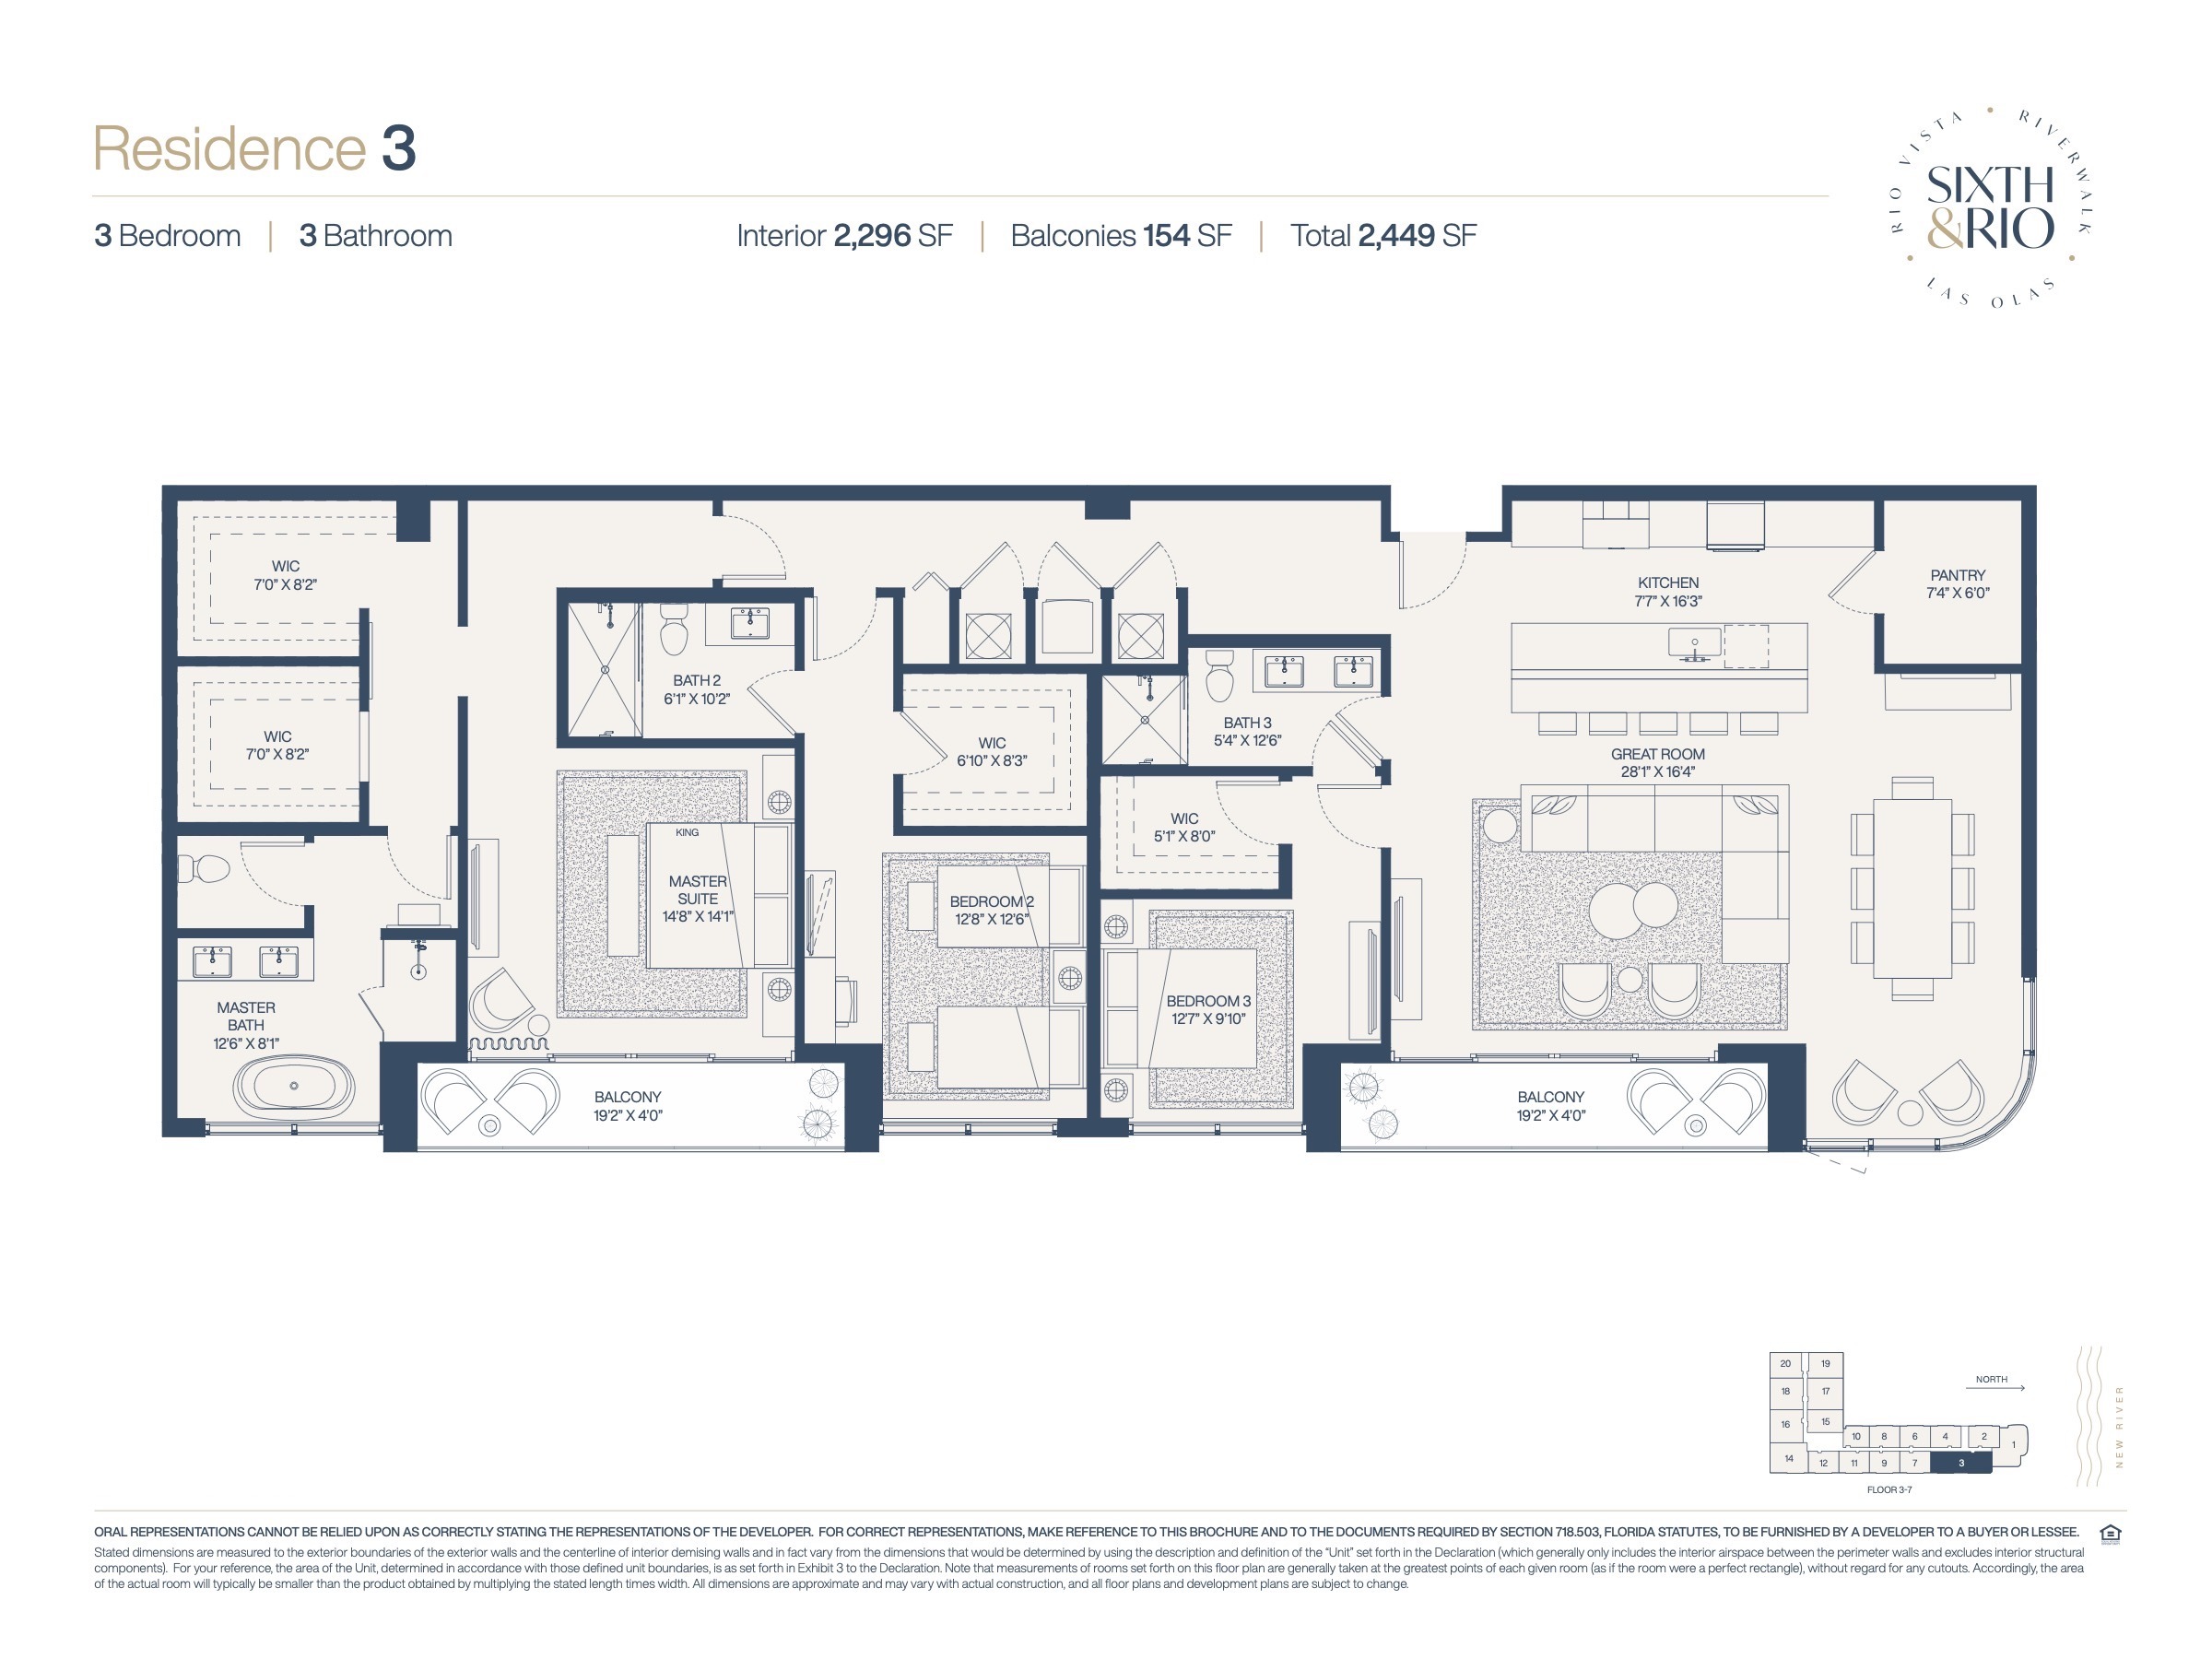 Floor Plan for Sixth & Rio Fort Lauderdale Floorplans, Residence 3